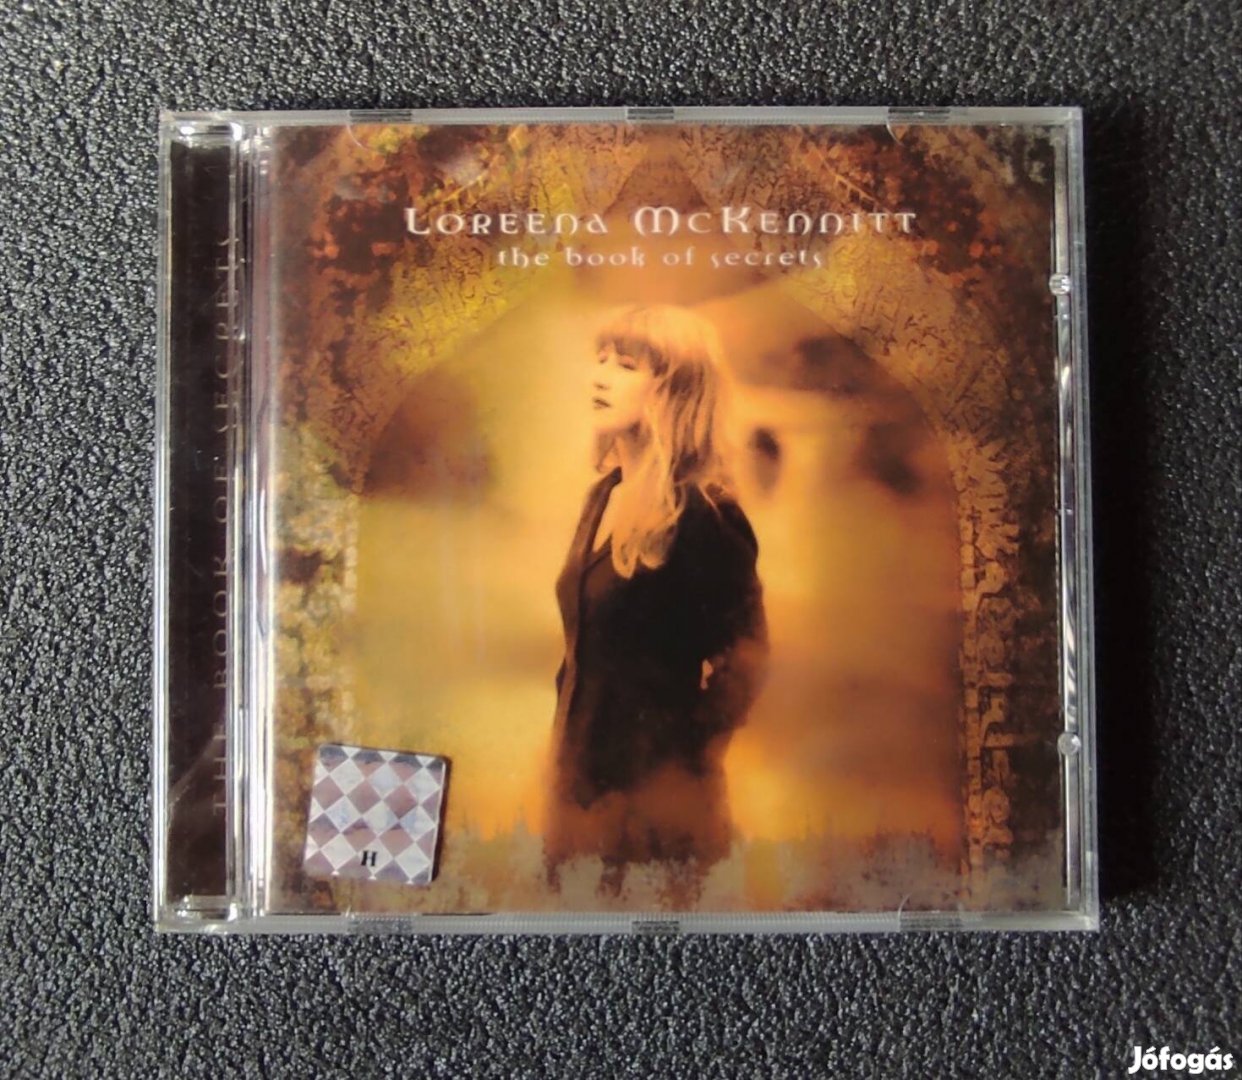 Lorenna Mckennitt:The book of secrety 1997 cd